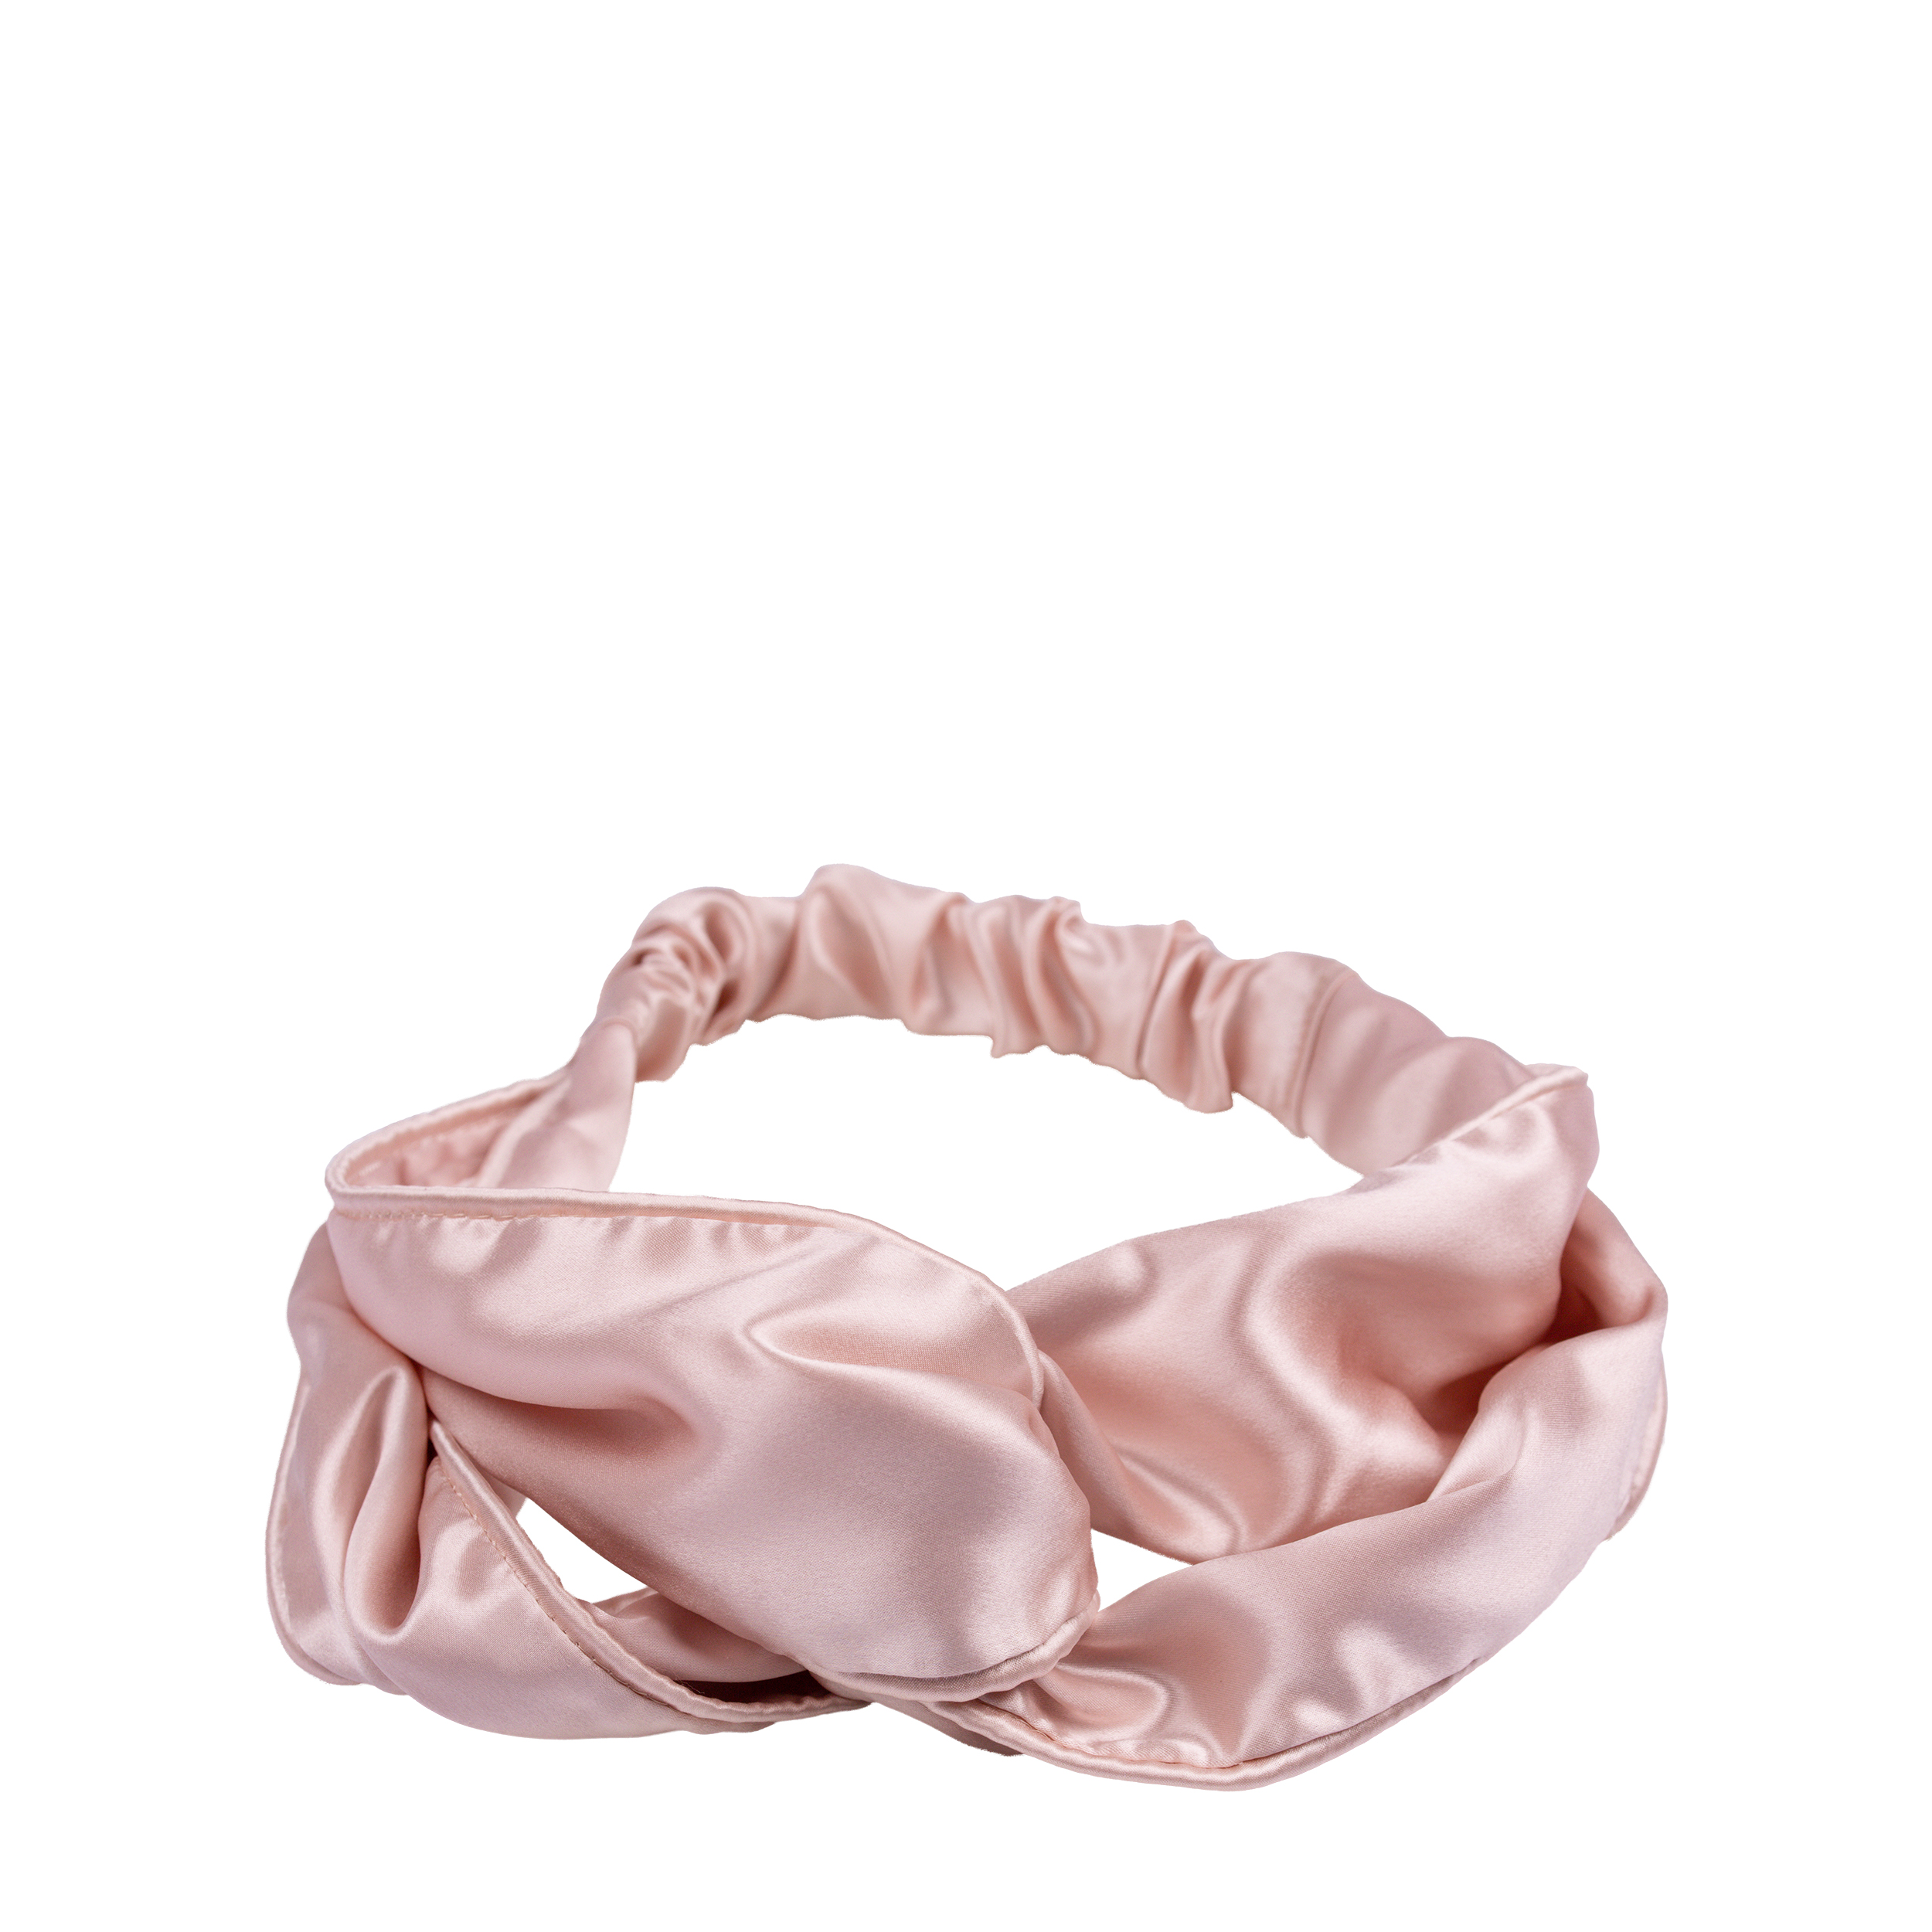 AYRIS SILK AYRIS SILK Шелковая повязка-бандо на голову, цвет розовая пудра 5005pinkpowder - фото 1